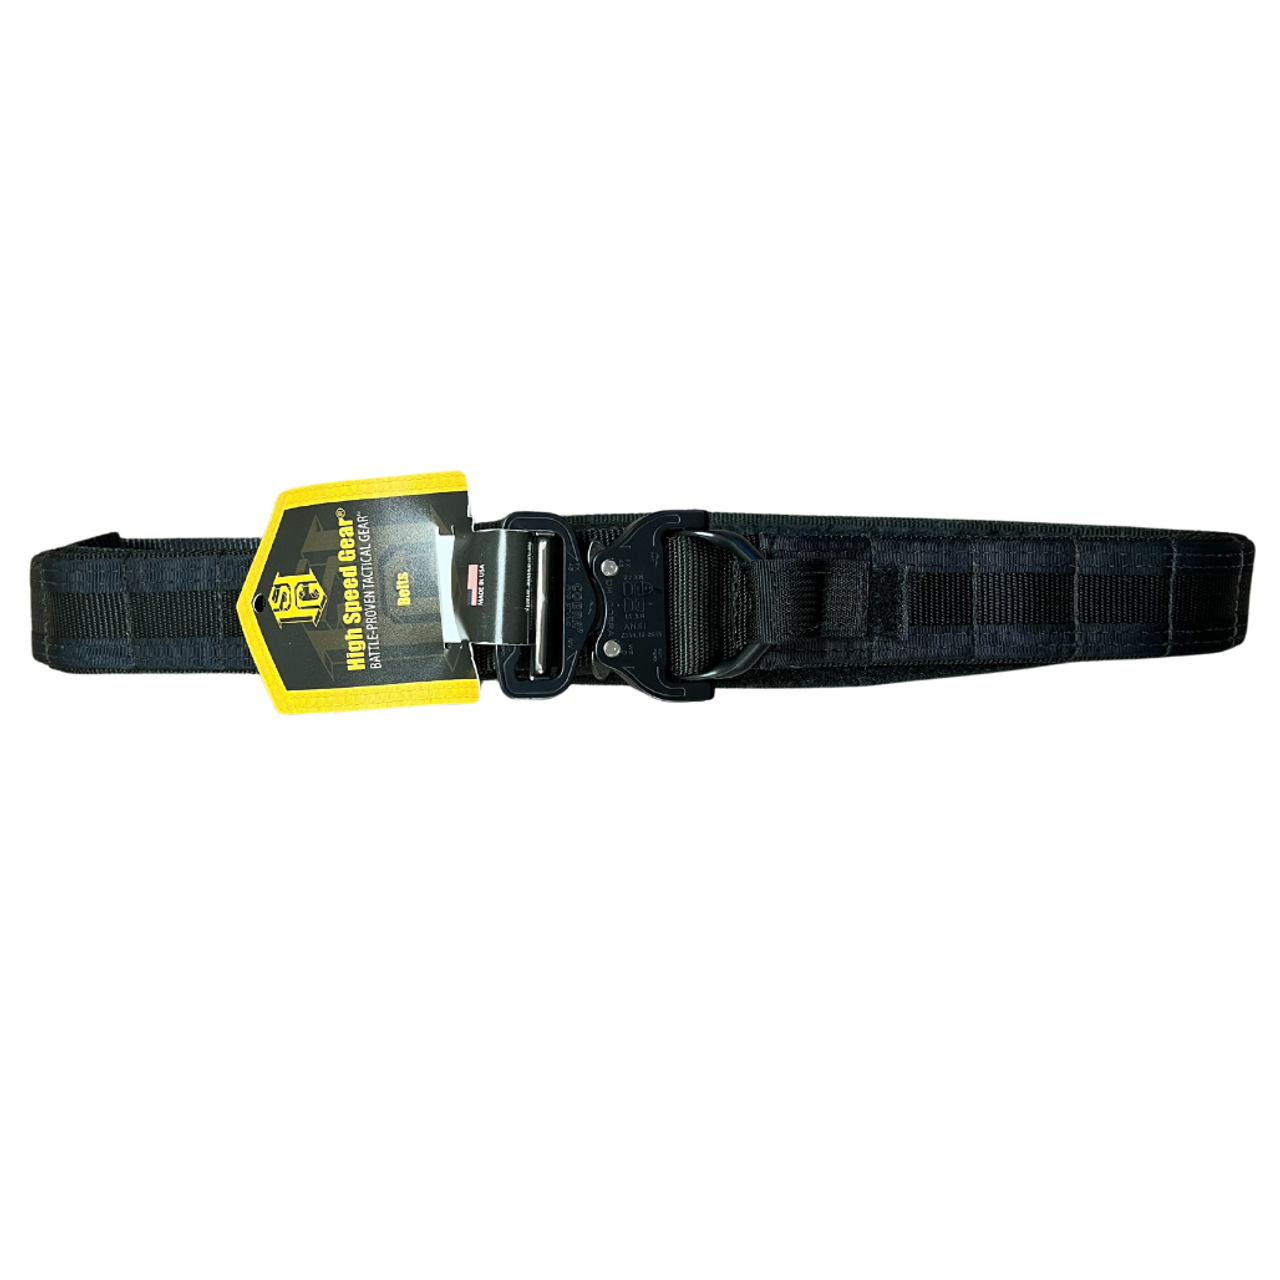 Contact Series Operator's Belt 1.75